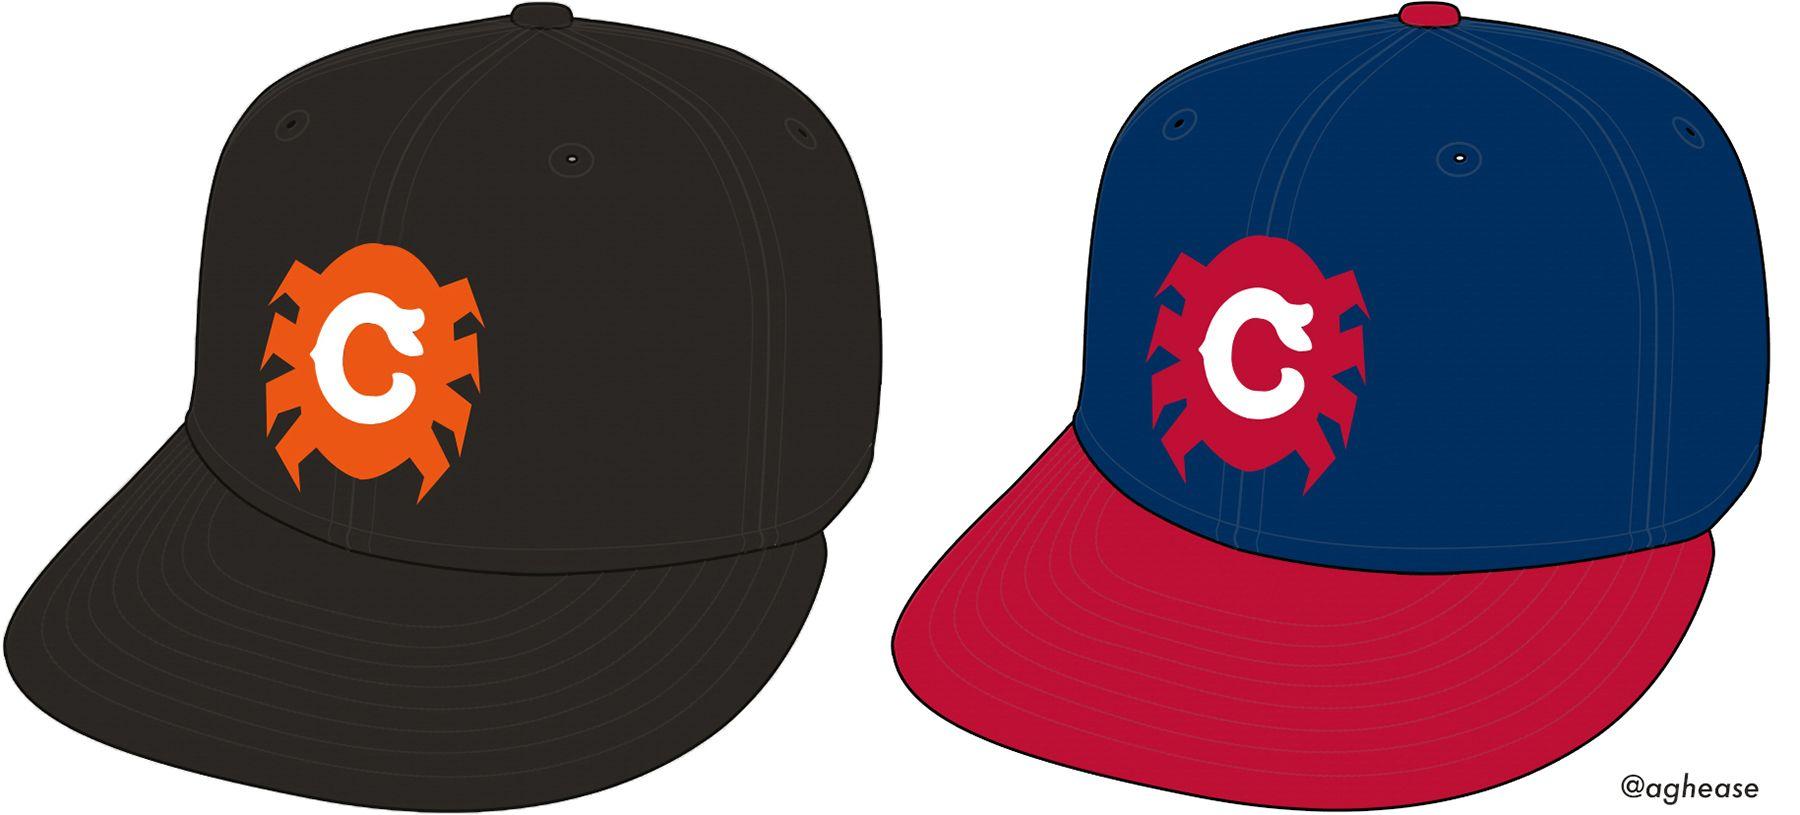 Cleveland Spiders Logo - Cleveland Spiders Baseball Cap Logo Concept - Album on Imgur